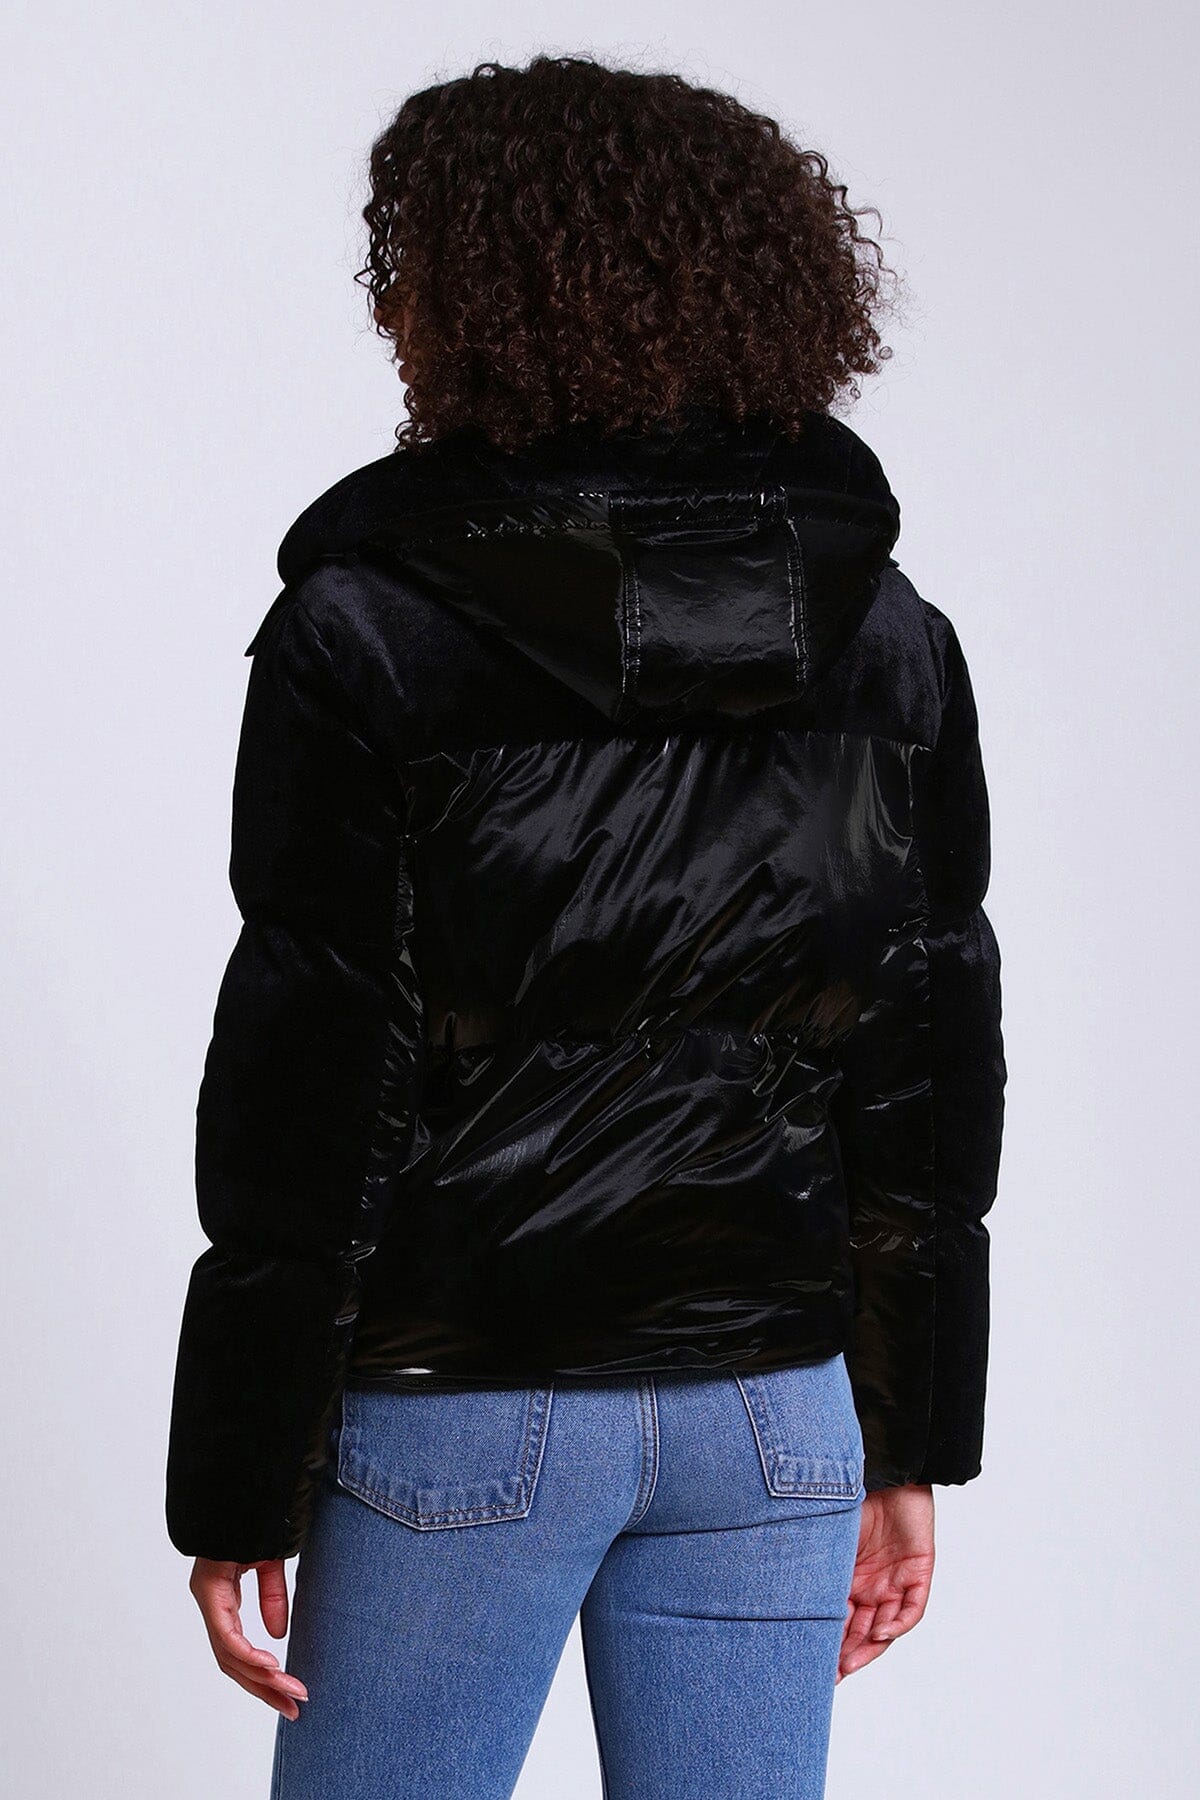 Black mixed media velvet puffer jacket coat - figure flattering cozy coats jackets for ladies